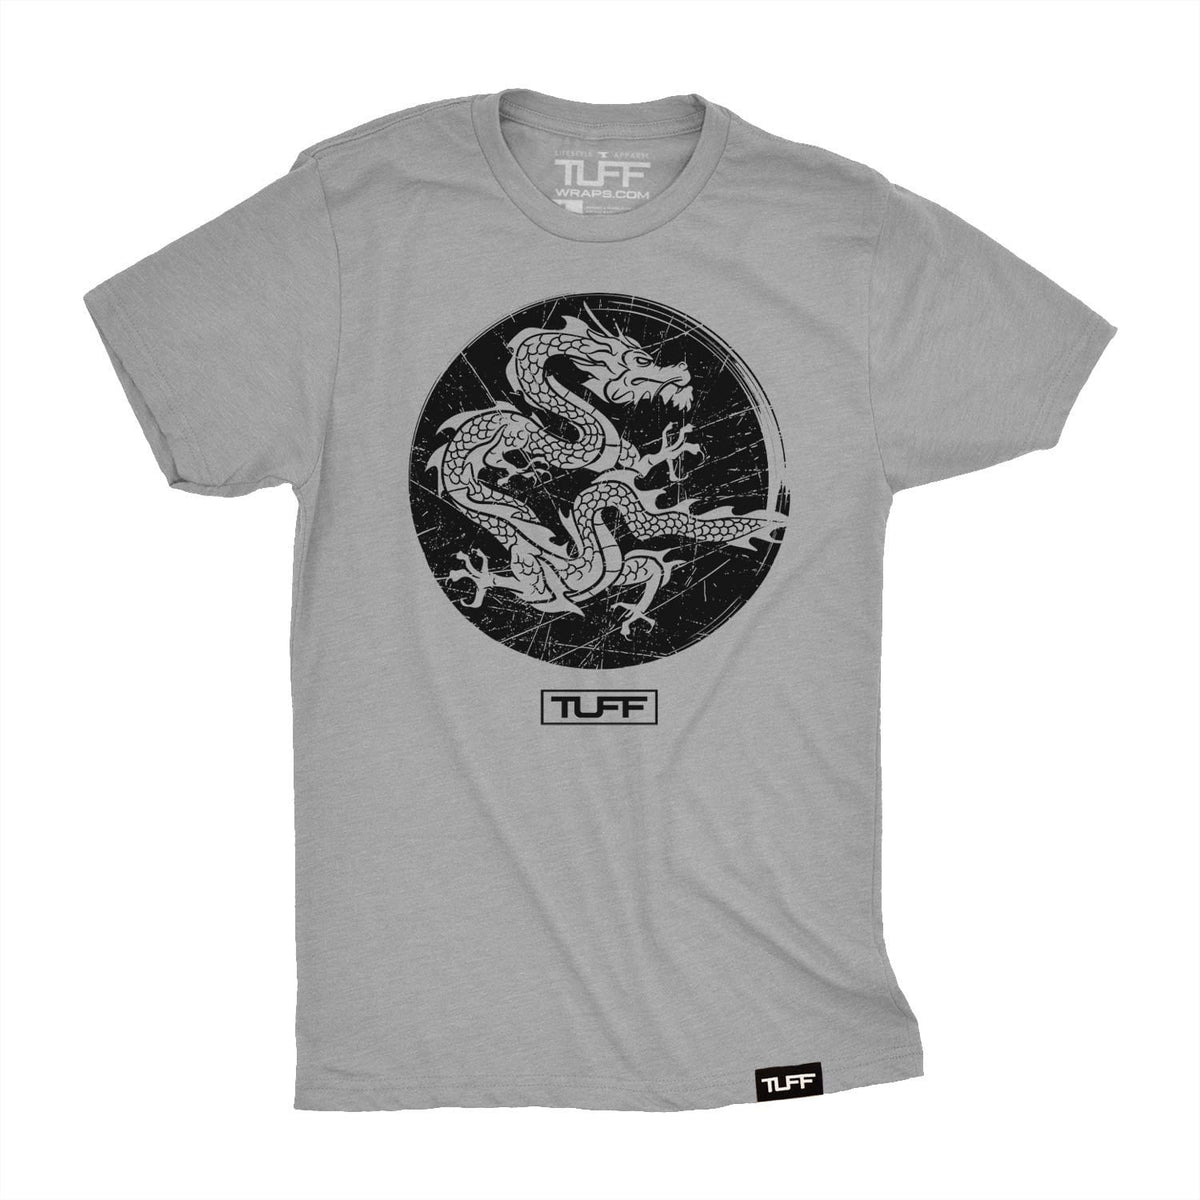 TUFF Dragon Tee T-shirt